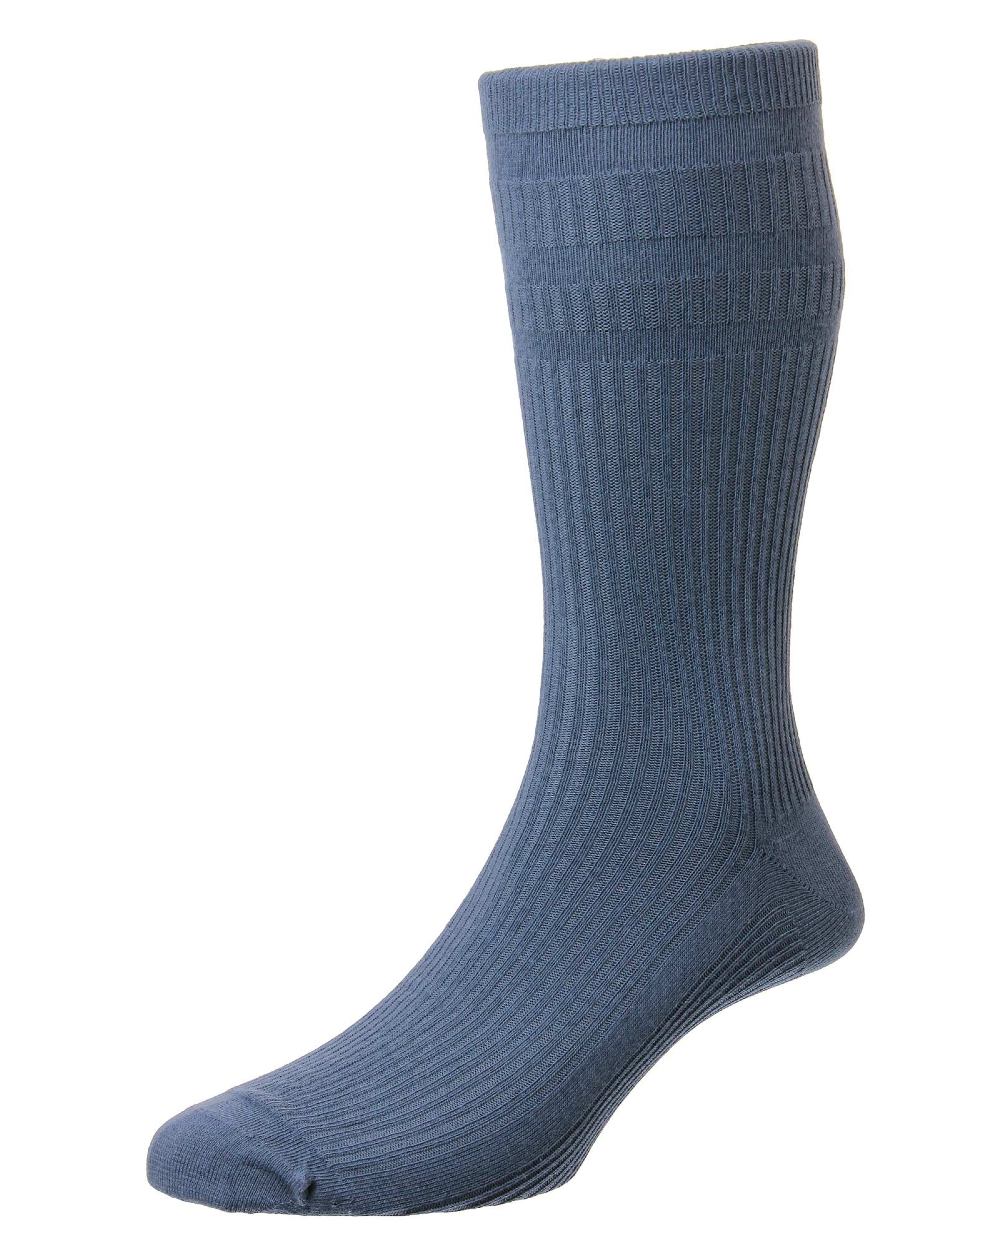 HJ Hall Original Cotton Soft Top Socks in Slate Blue 